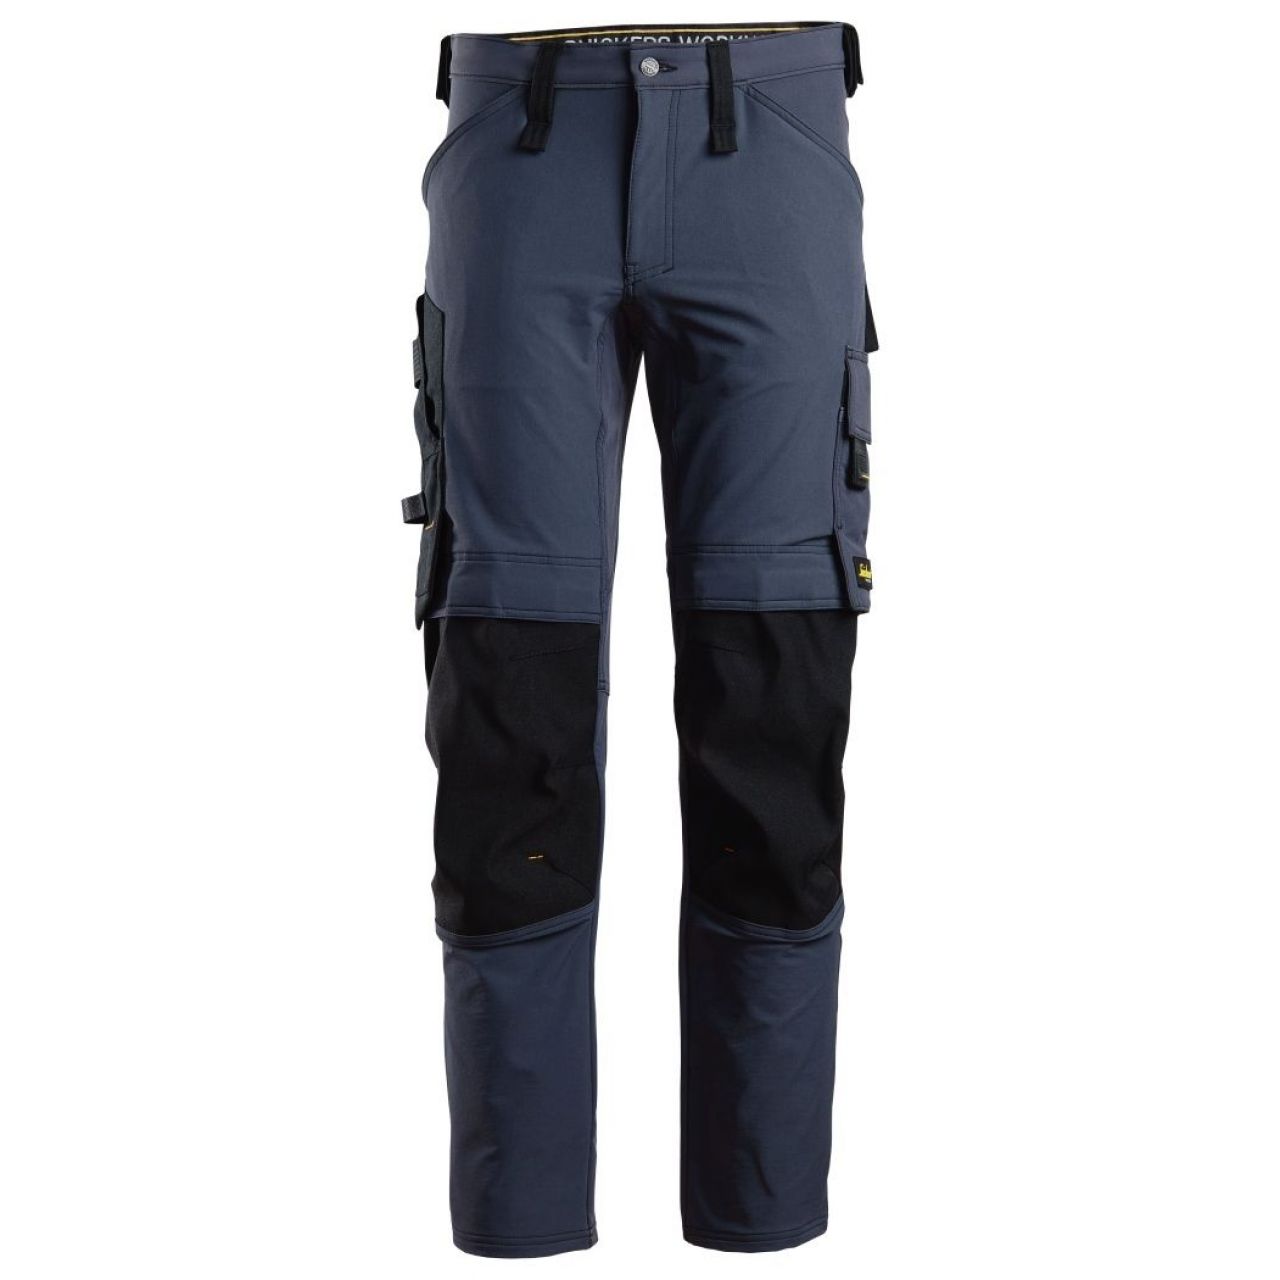 Pantalon elastico AllroundWork azul marino-negro talla 060